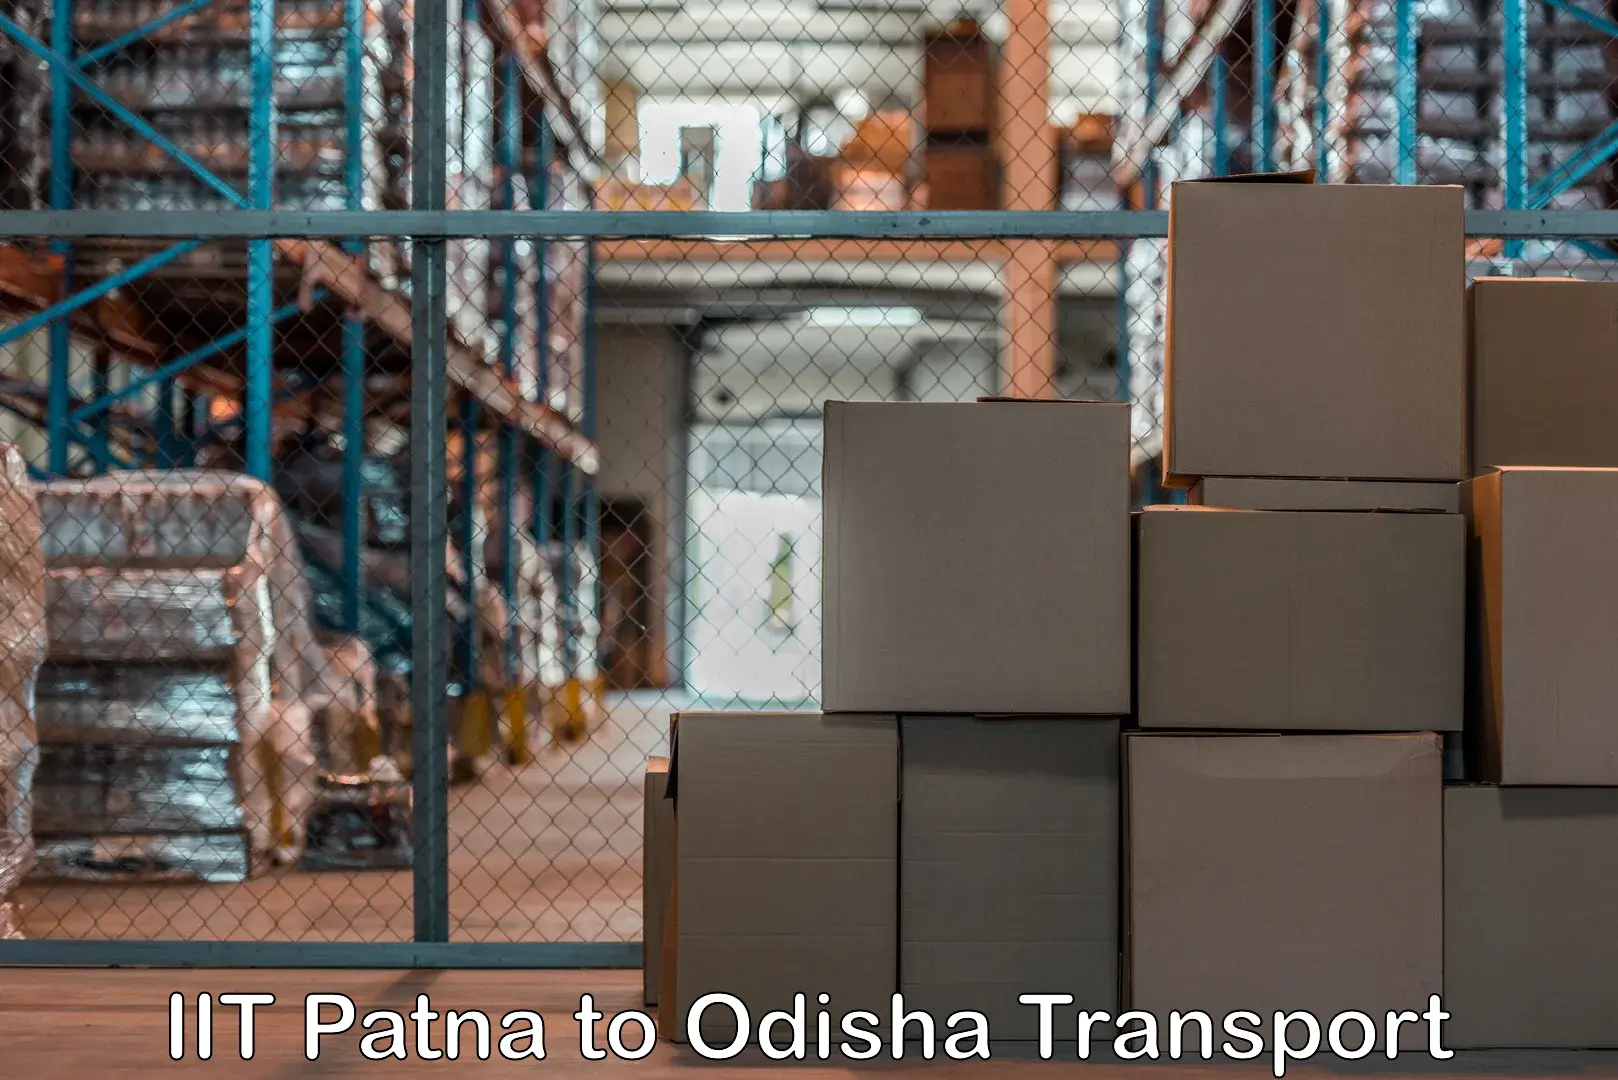 Online transport service IIT Patna to Jaraka